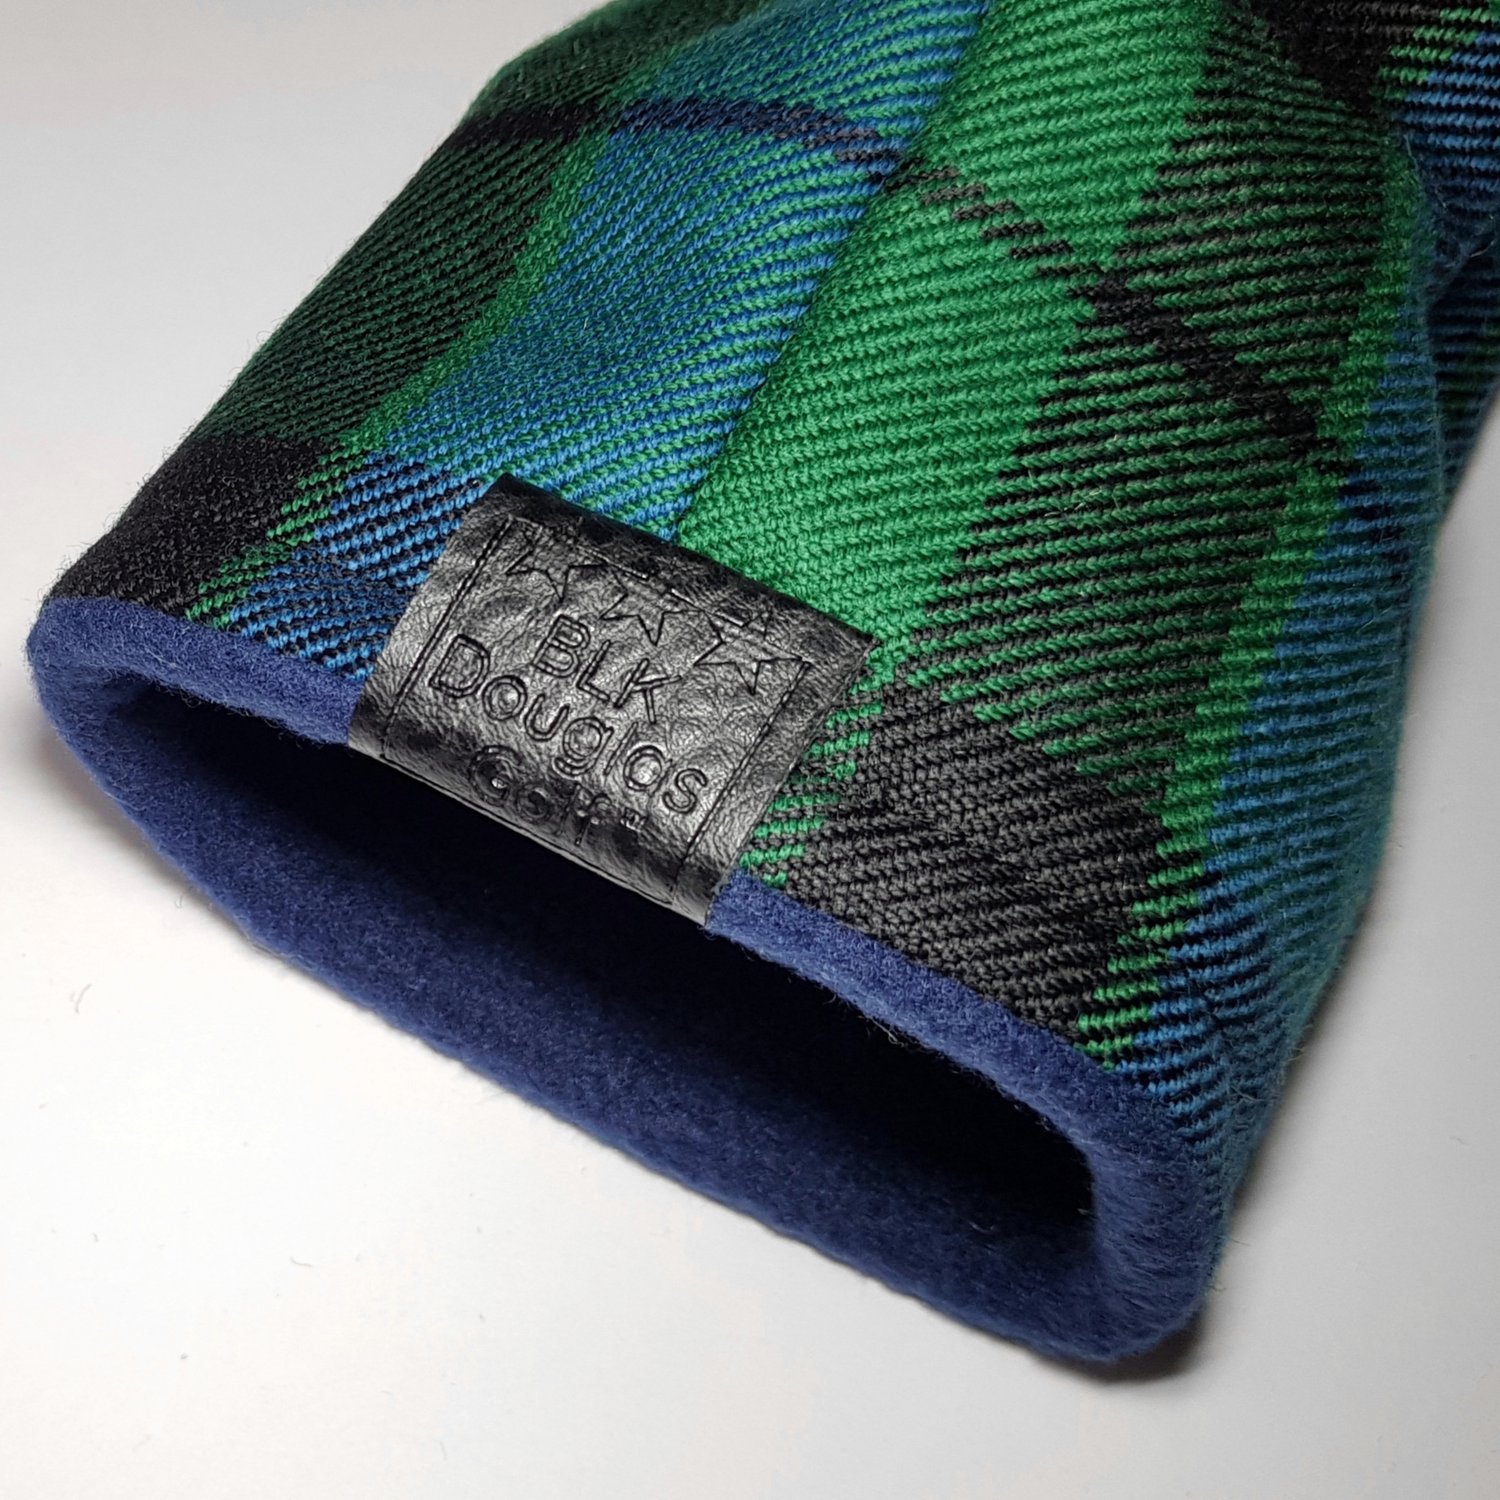 Bespoke Golf Headcovers of Customer Clan Tartan or Plaid | BLK Douglas Golf